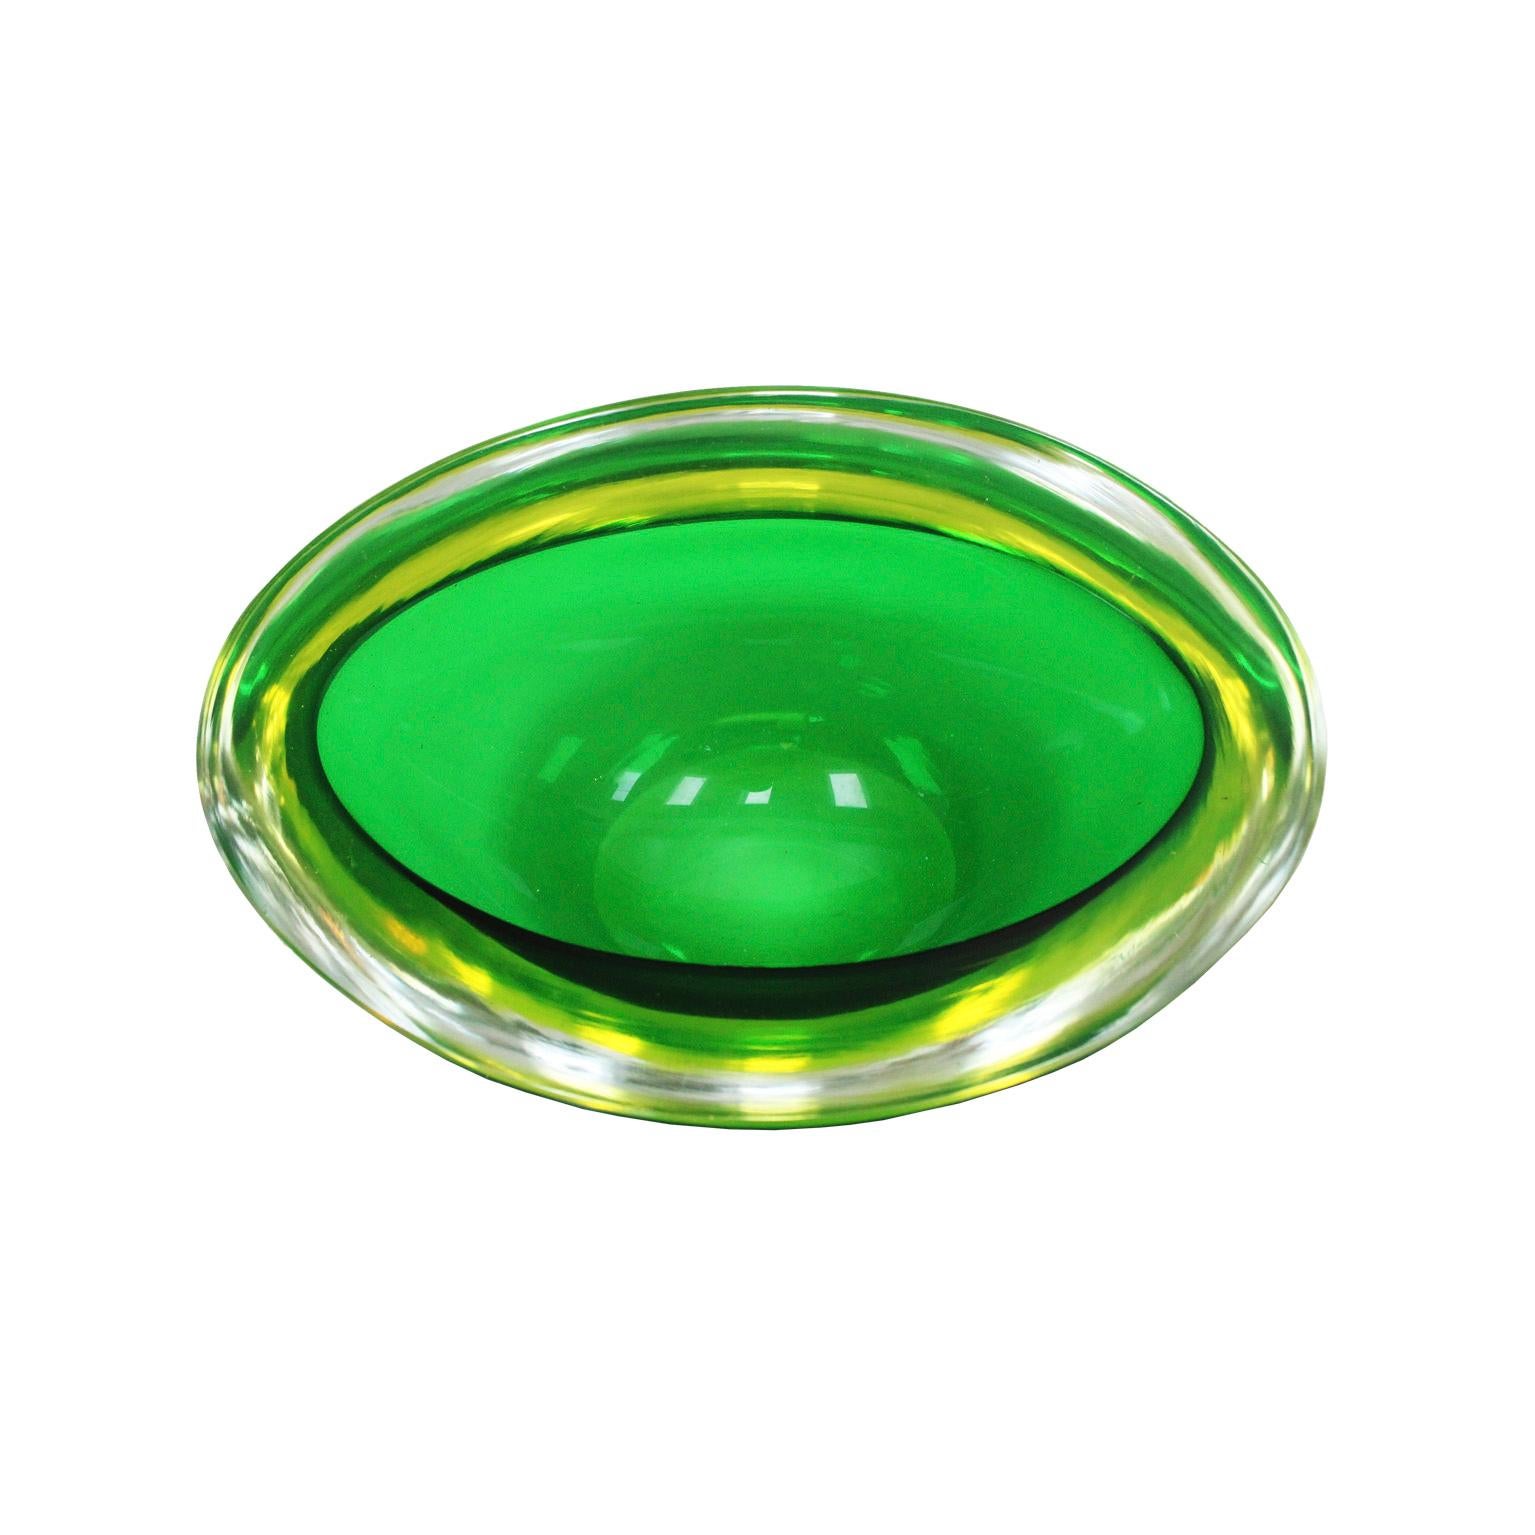 Italian Mid-Century Modern Green Sommerso Murano Glass Bowl by Flavio Poli 1950 For Sale